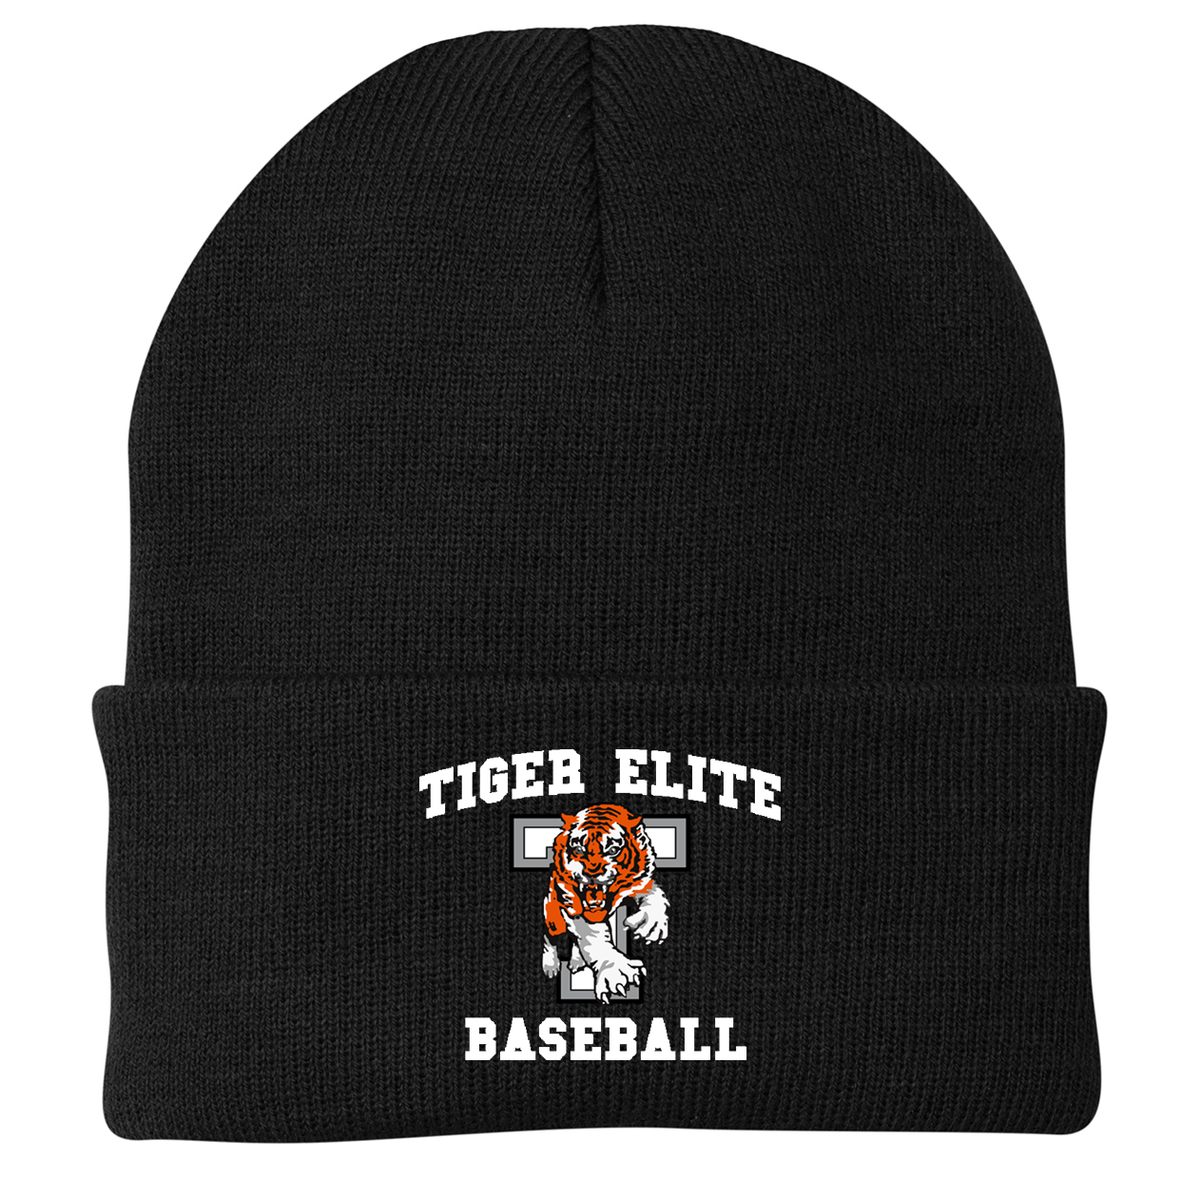 Tiger Elite Baseball Knit Beanie